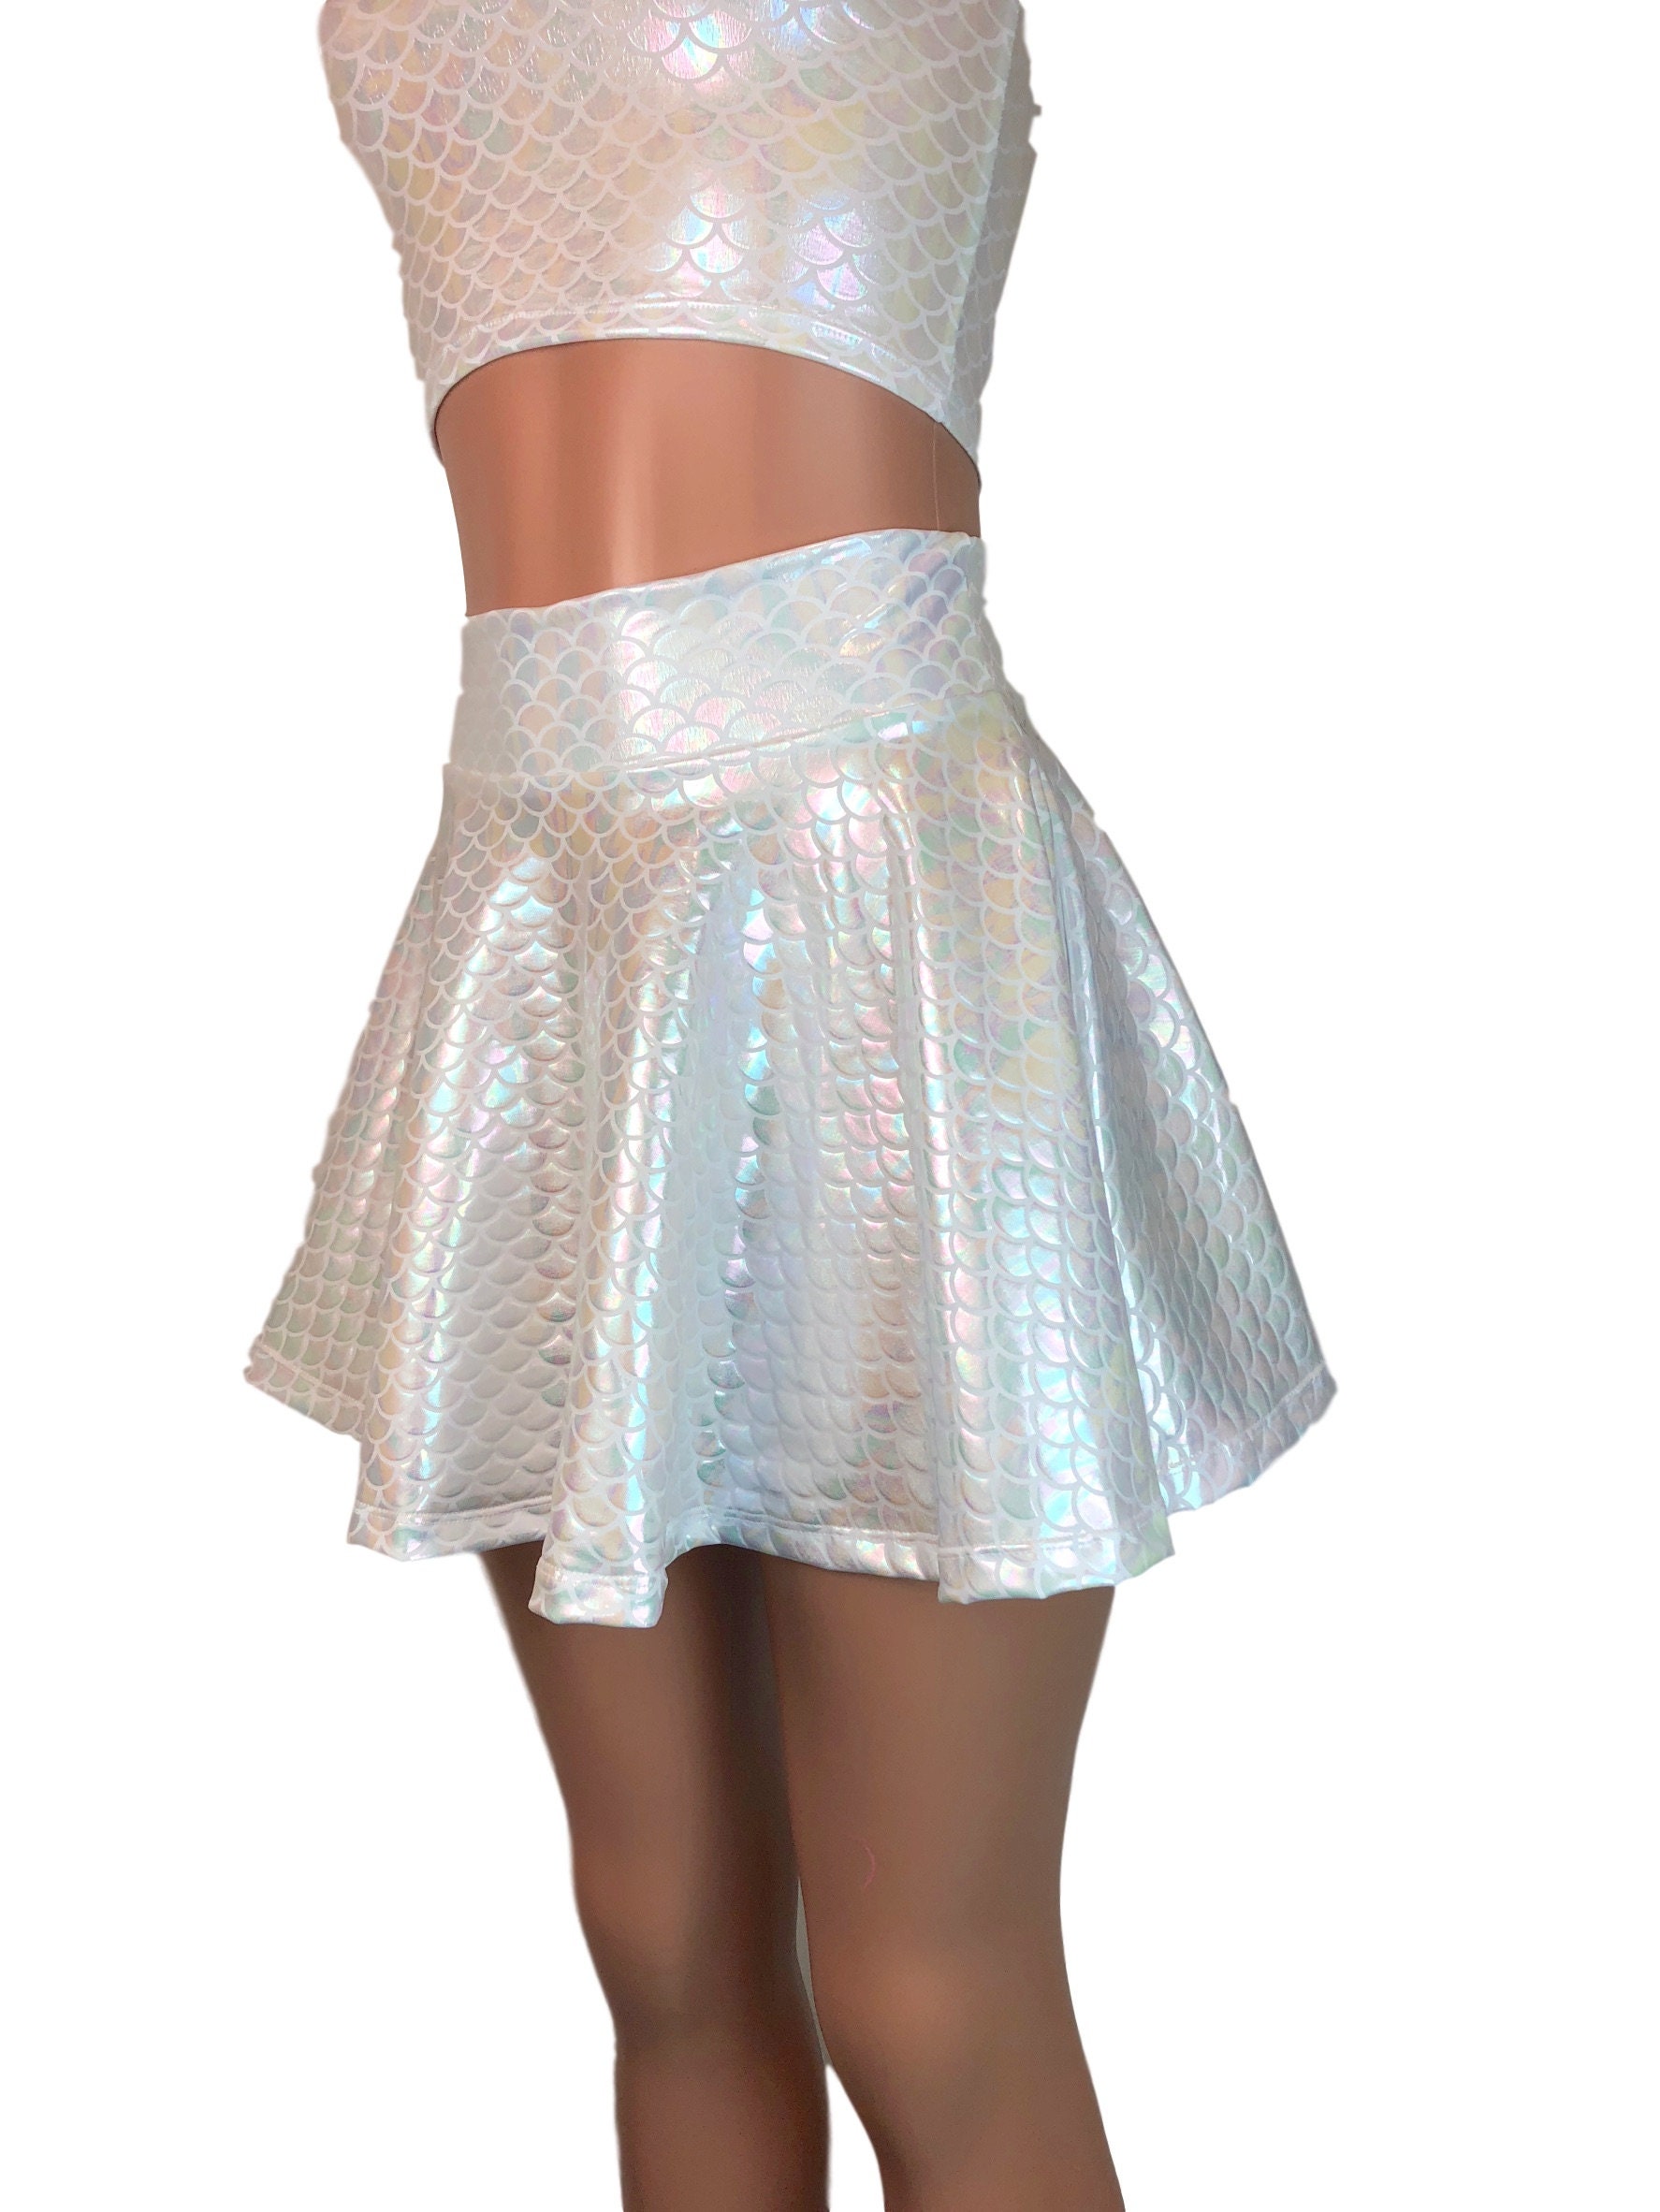 White Mermaid Scales Holographic High Waisted Skater Skirt - Etsy